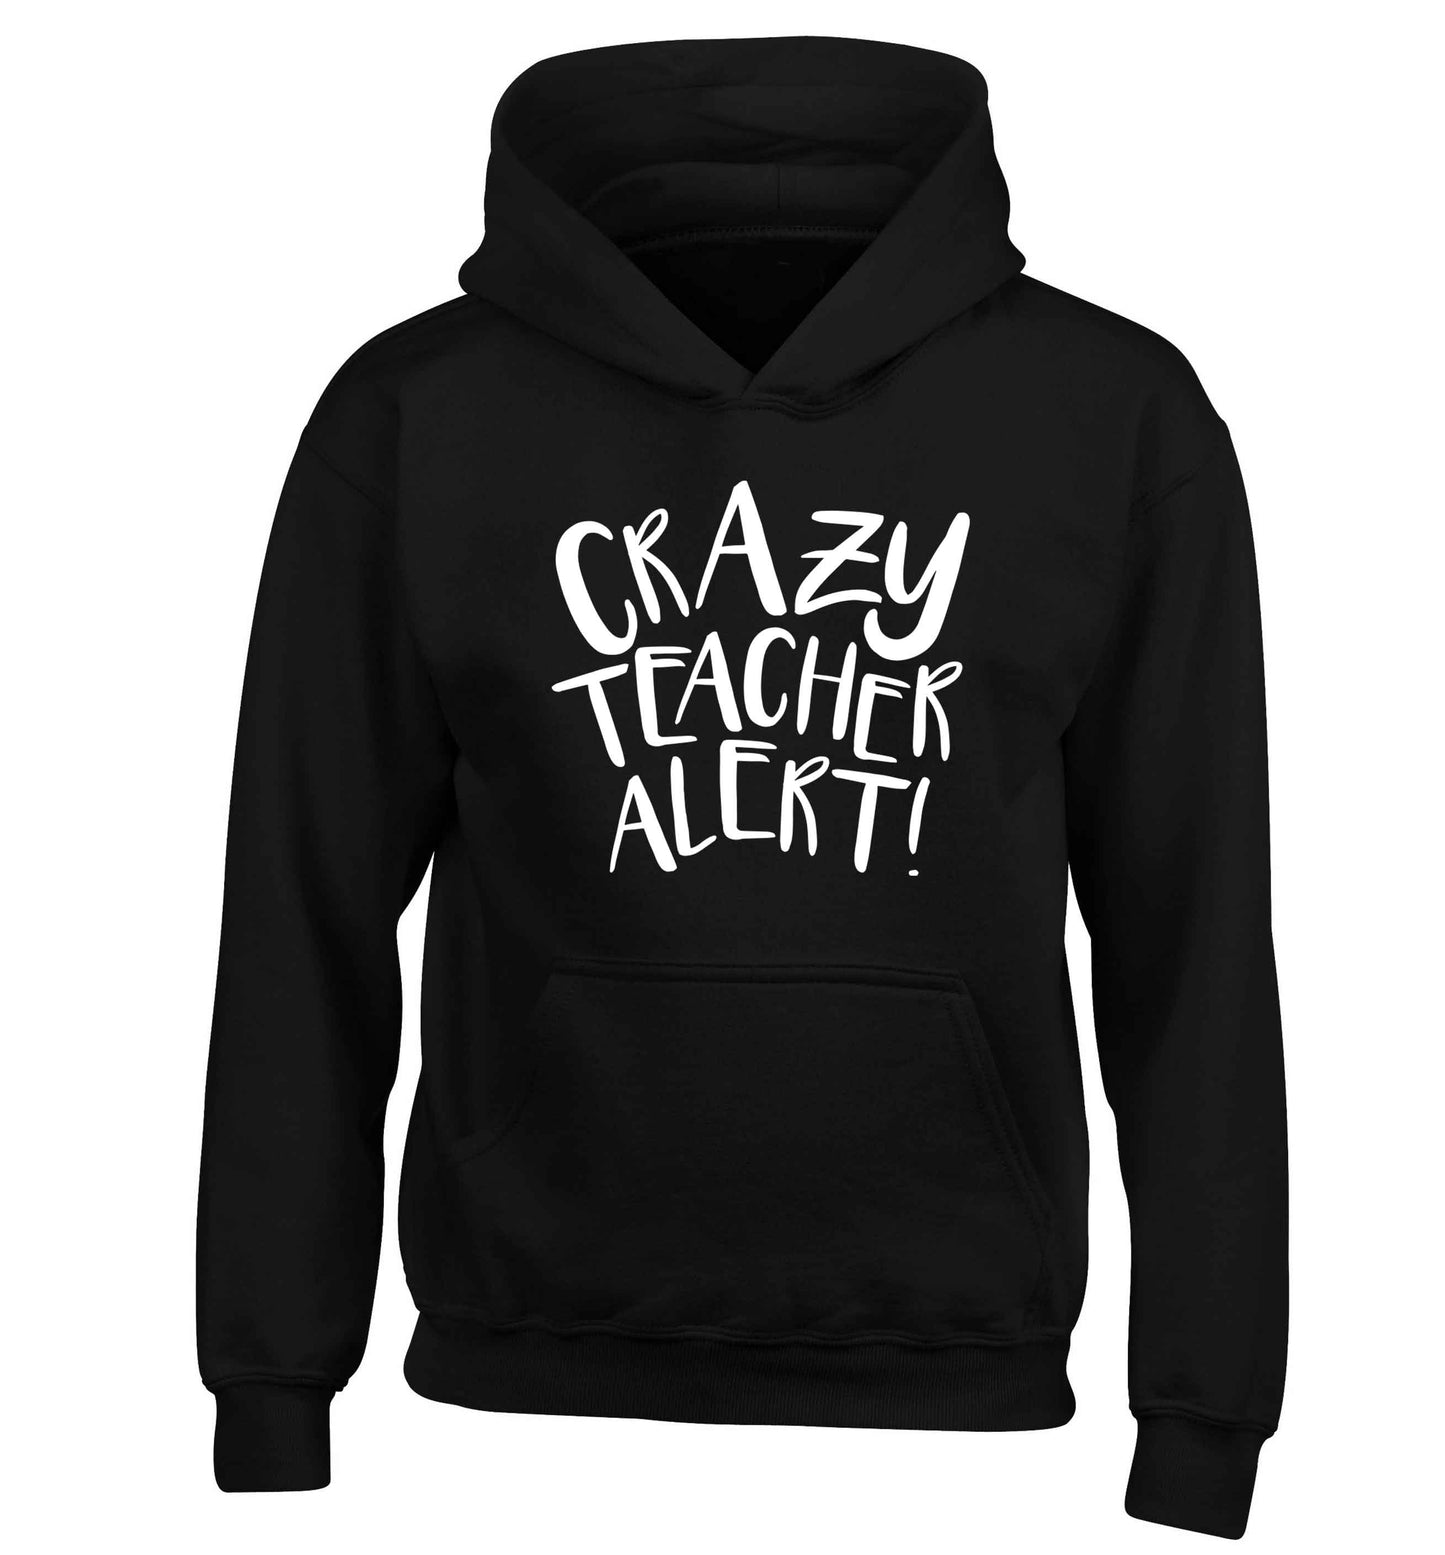 Crazy teacher alert children's black hoodie 12-13 Years